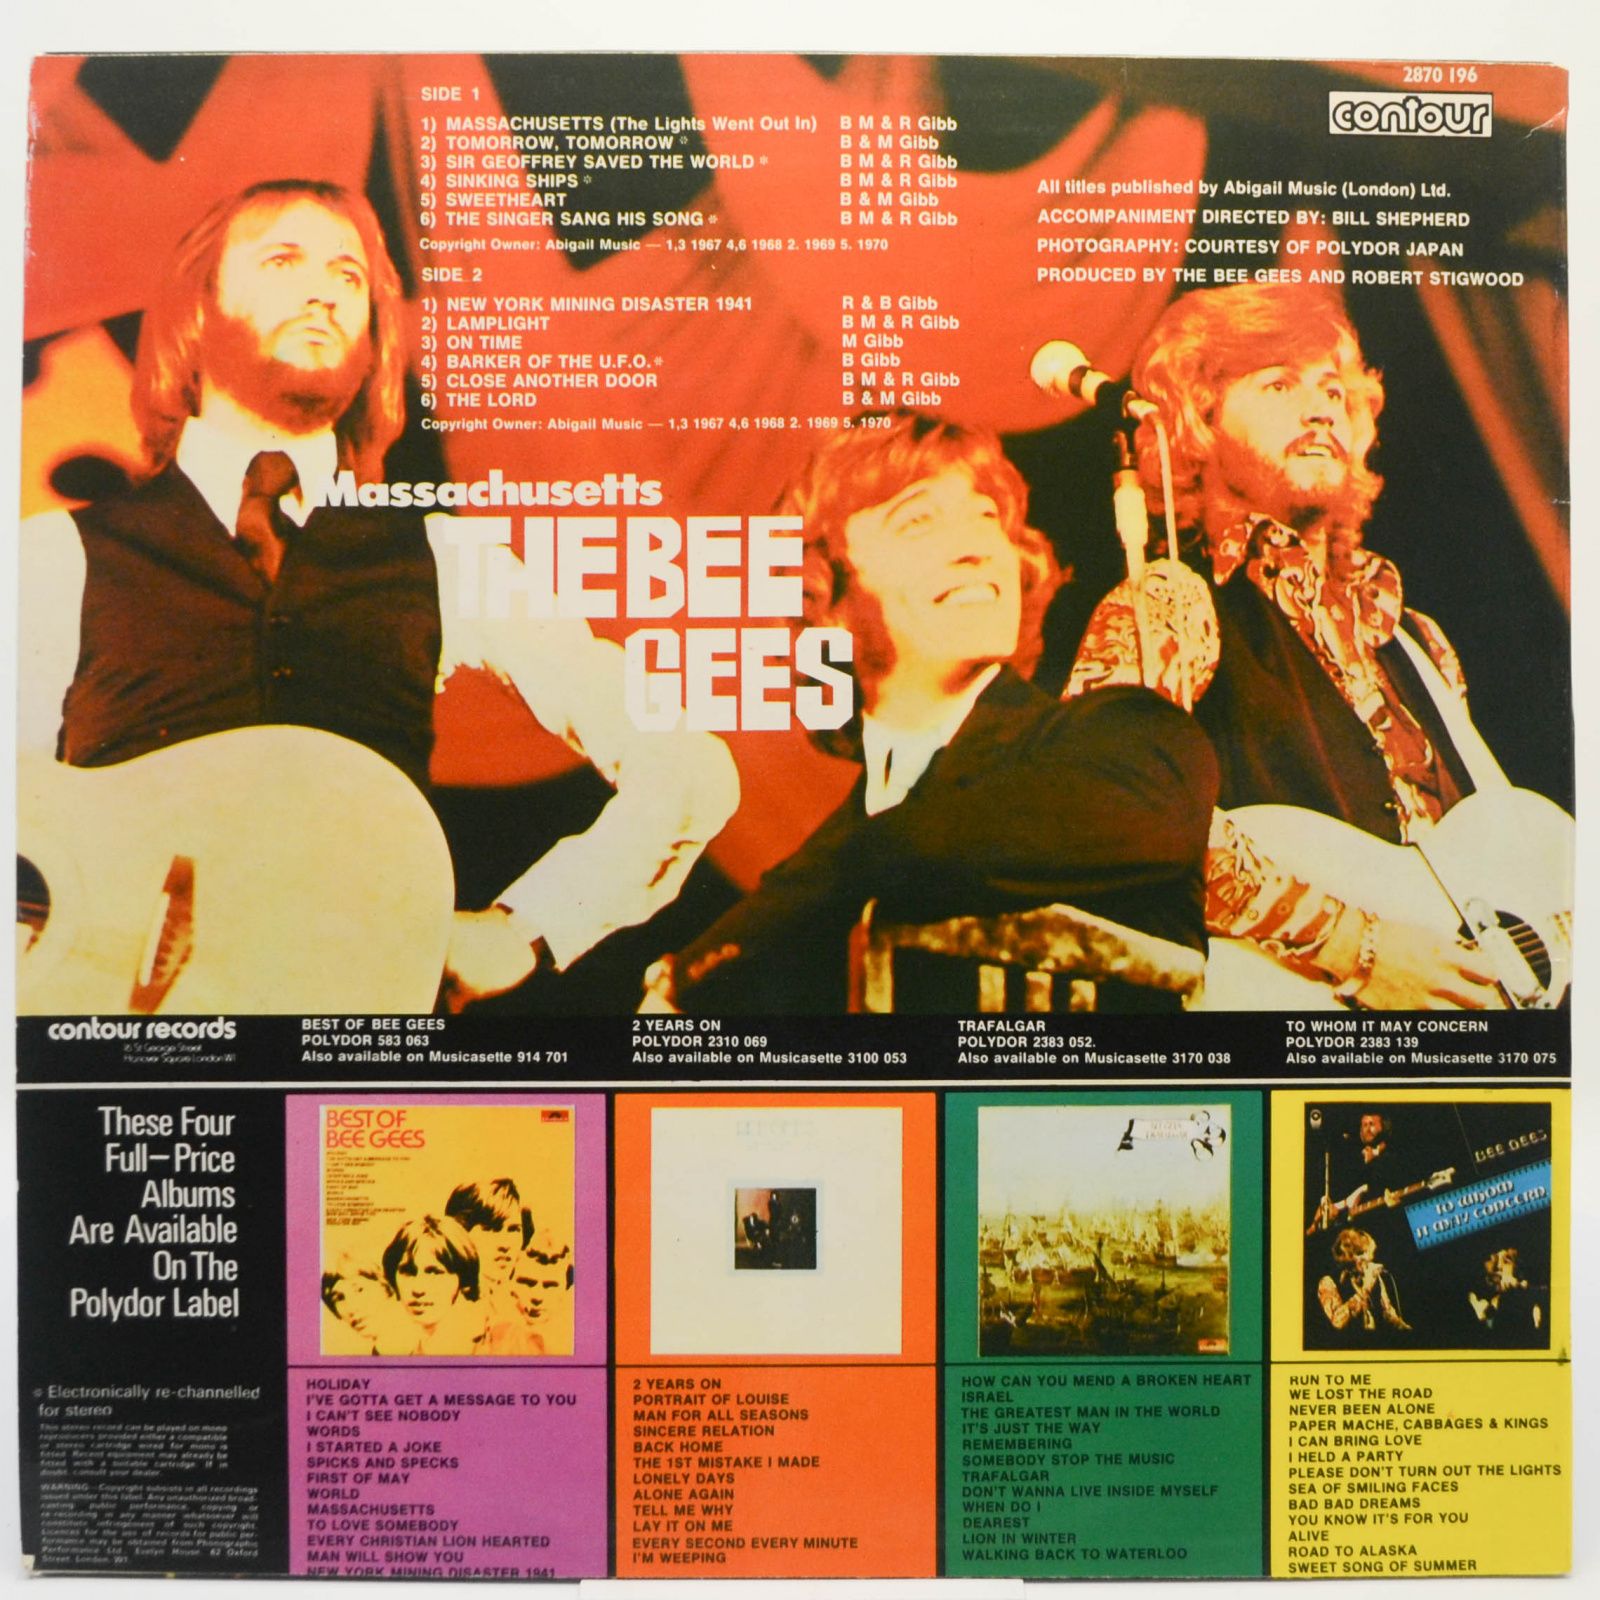 Bee Gees — Massachusetts, 1973